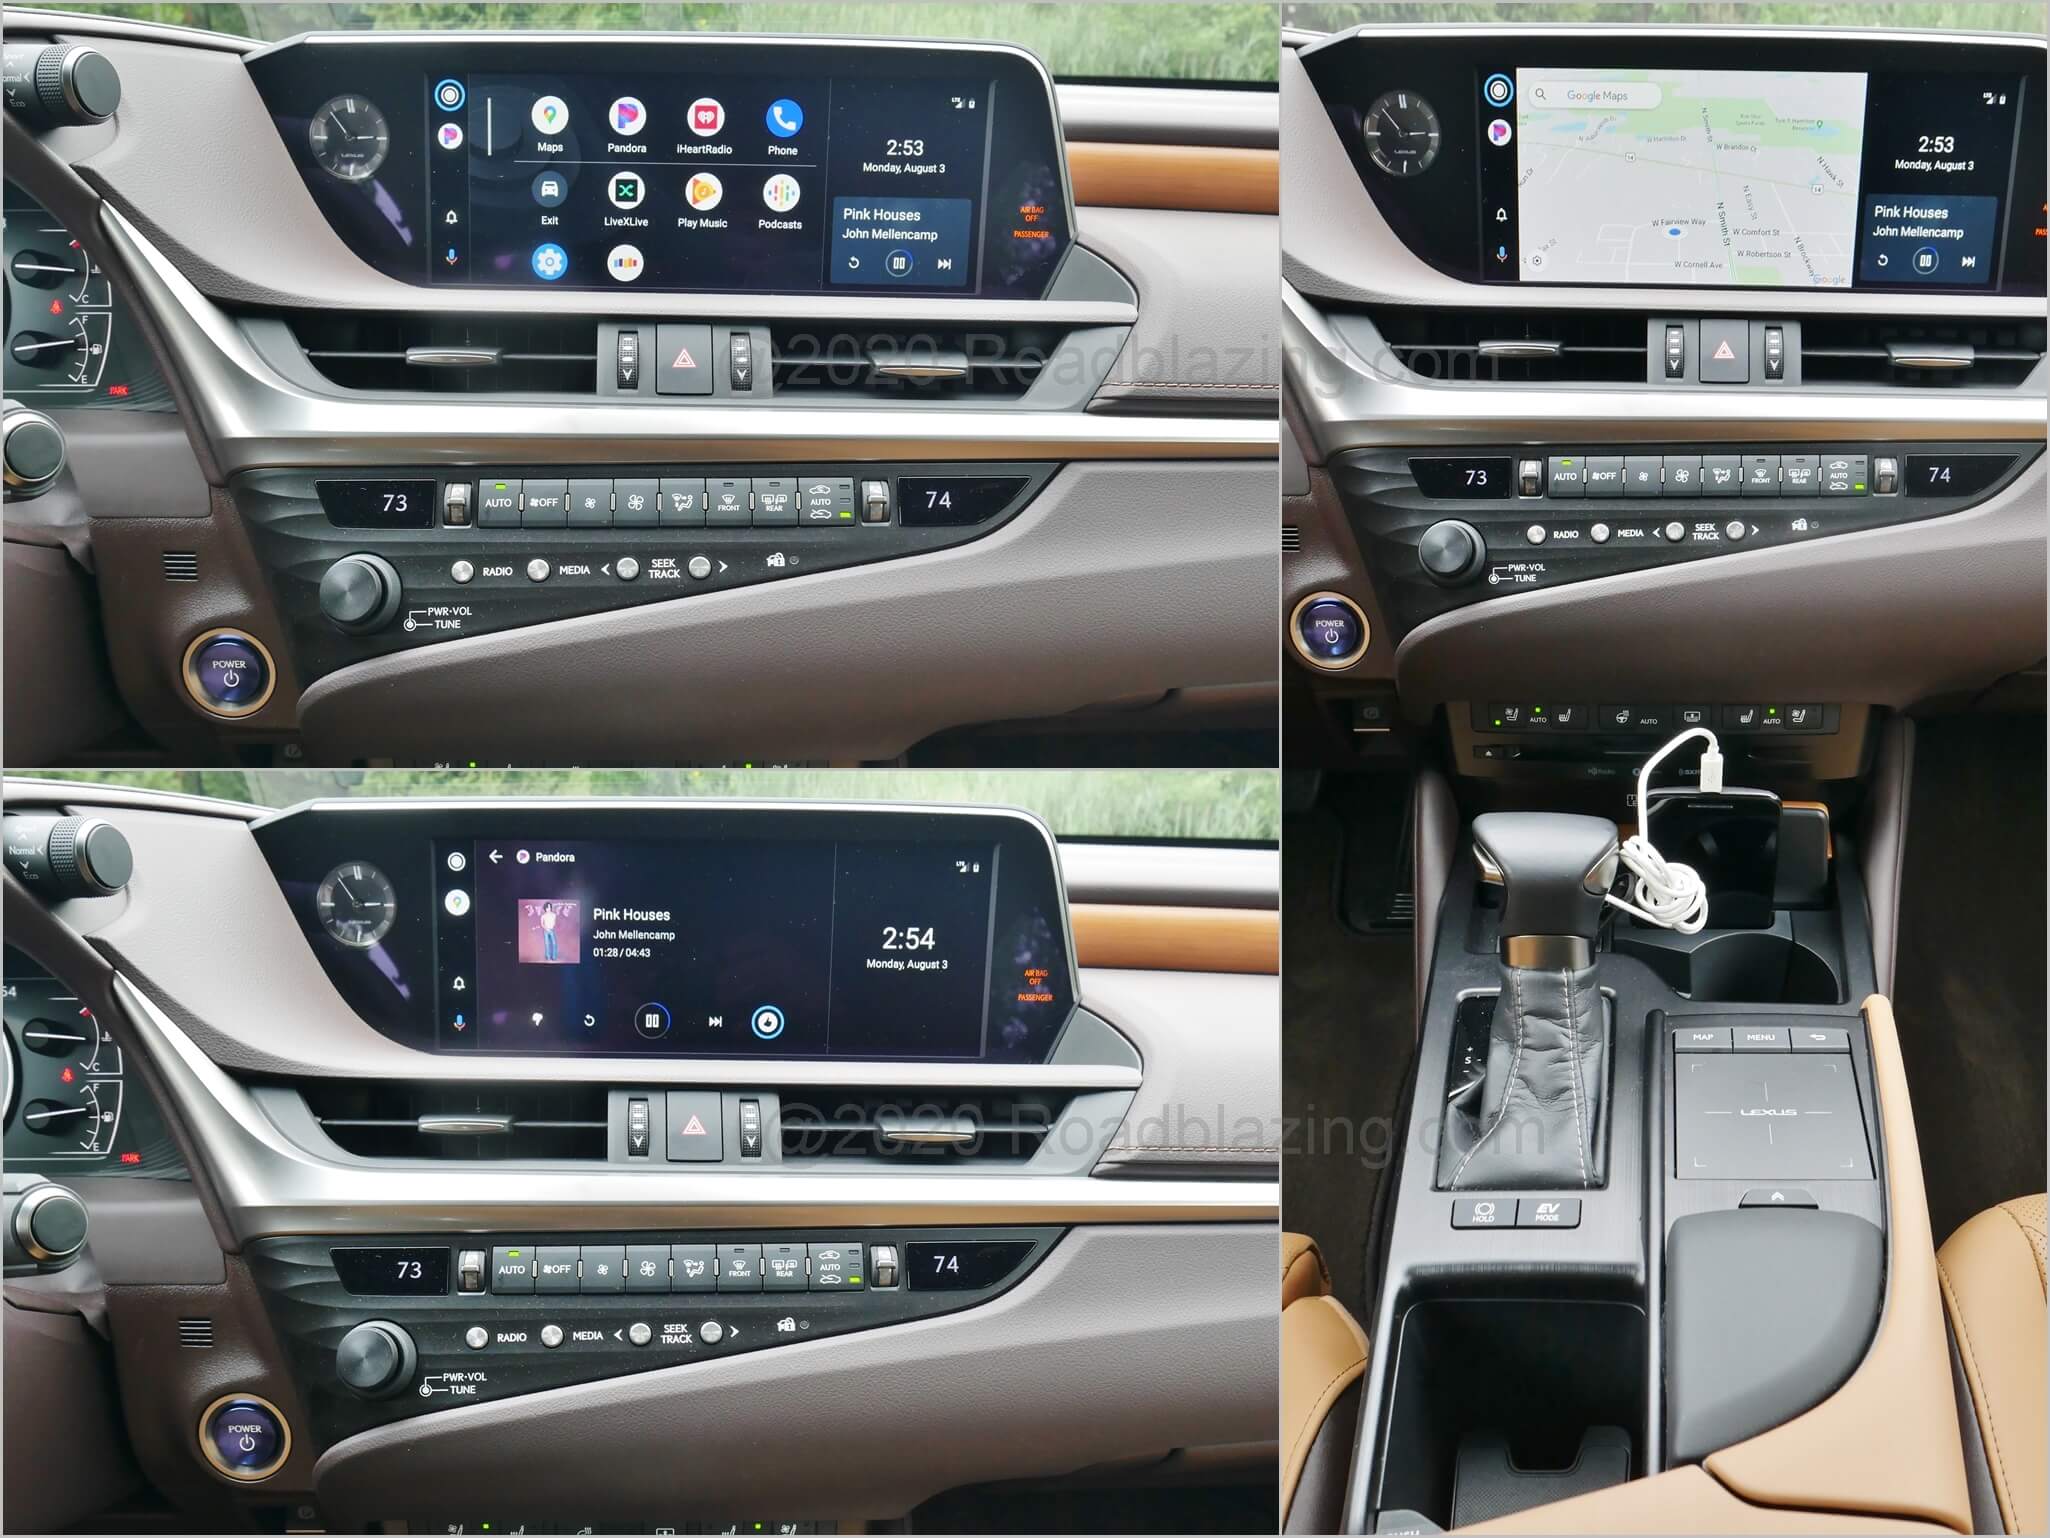 2020 Lexus ES 300h: Android Auto (or CarPlay) apps replace most Lexus Enform infotainment apps.